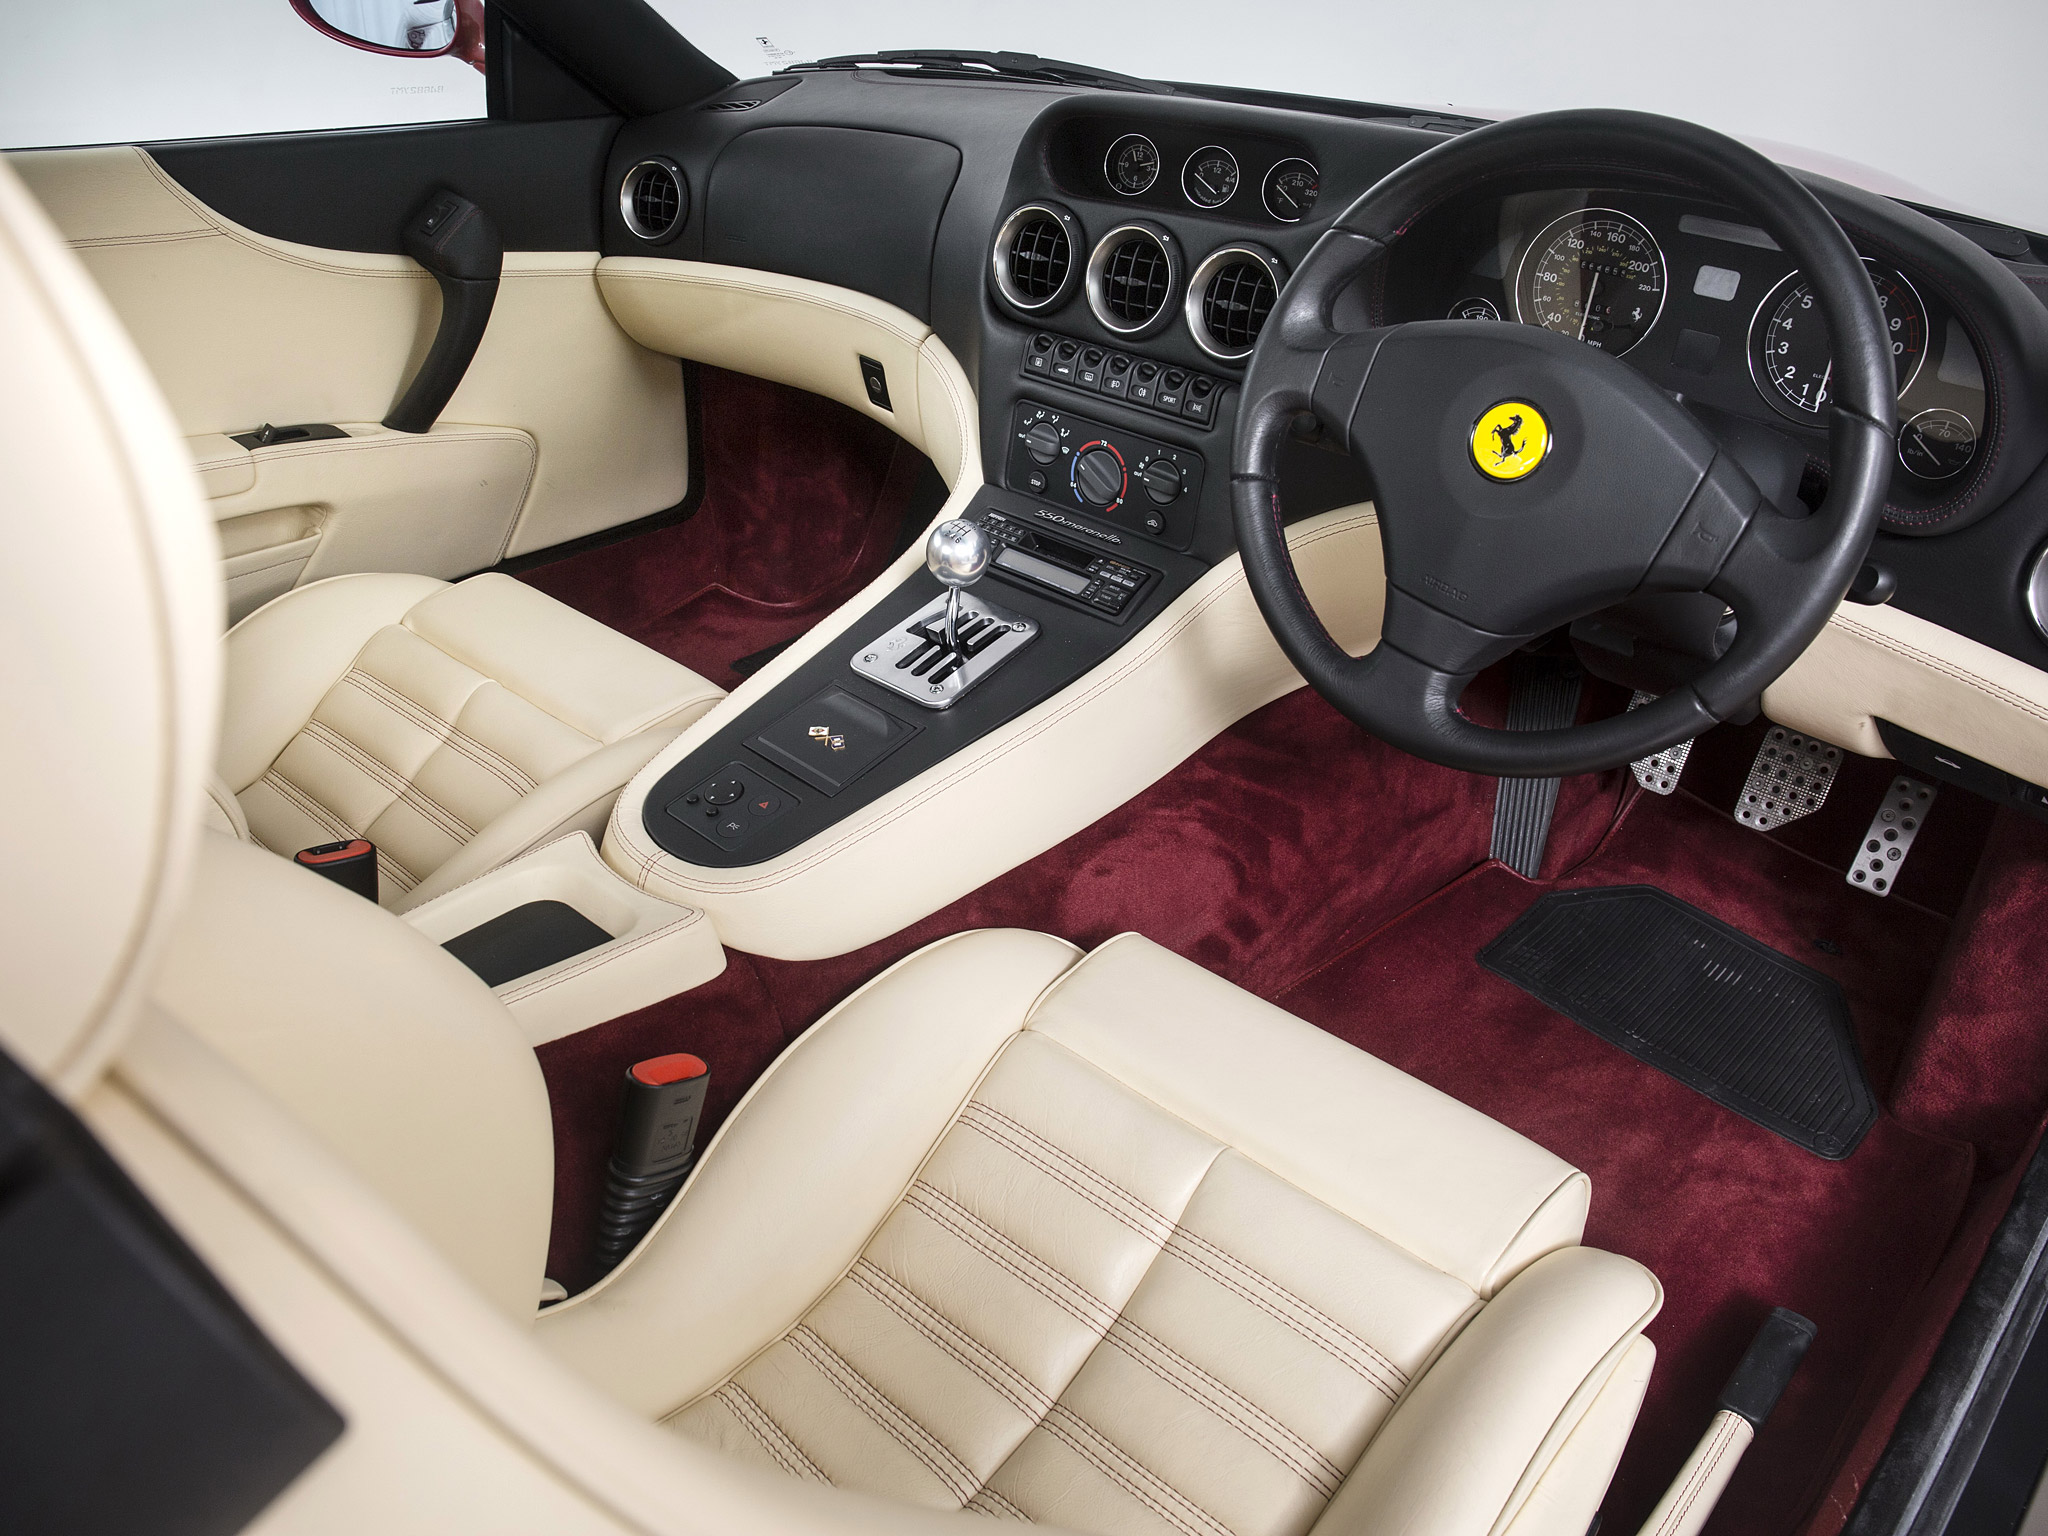  1997 Ferrari 550 Maranello Wallpaper.